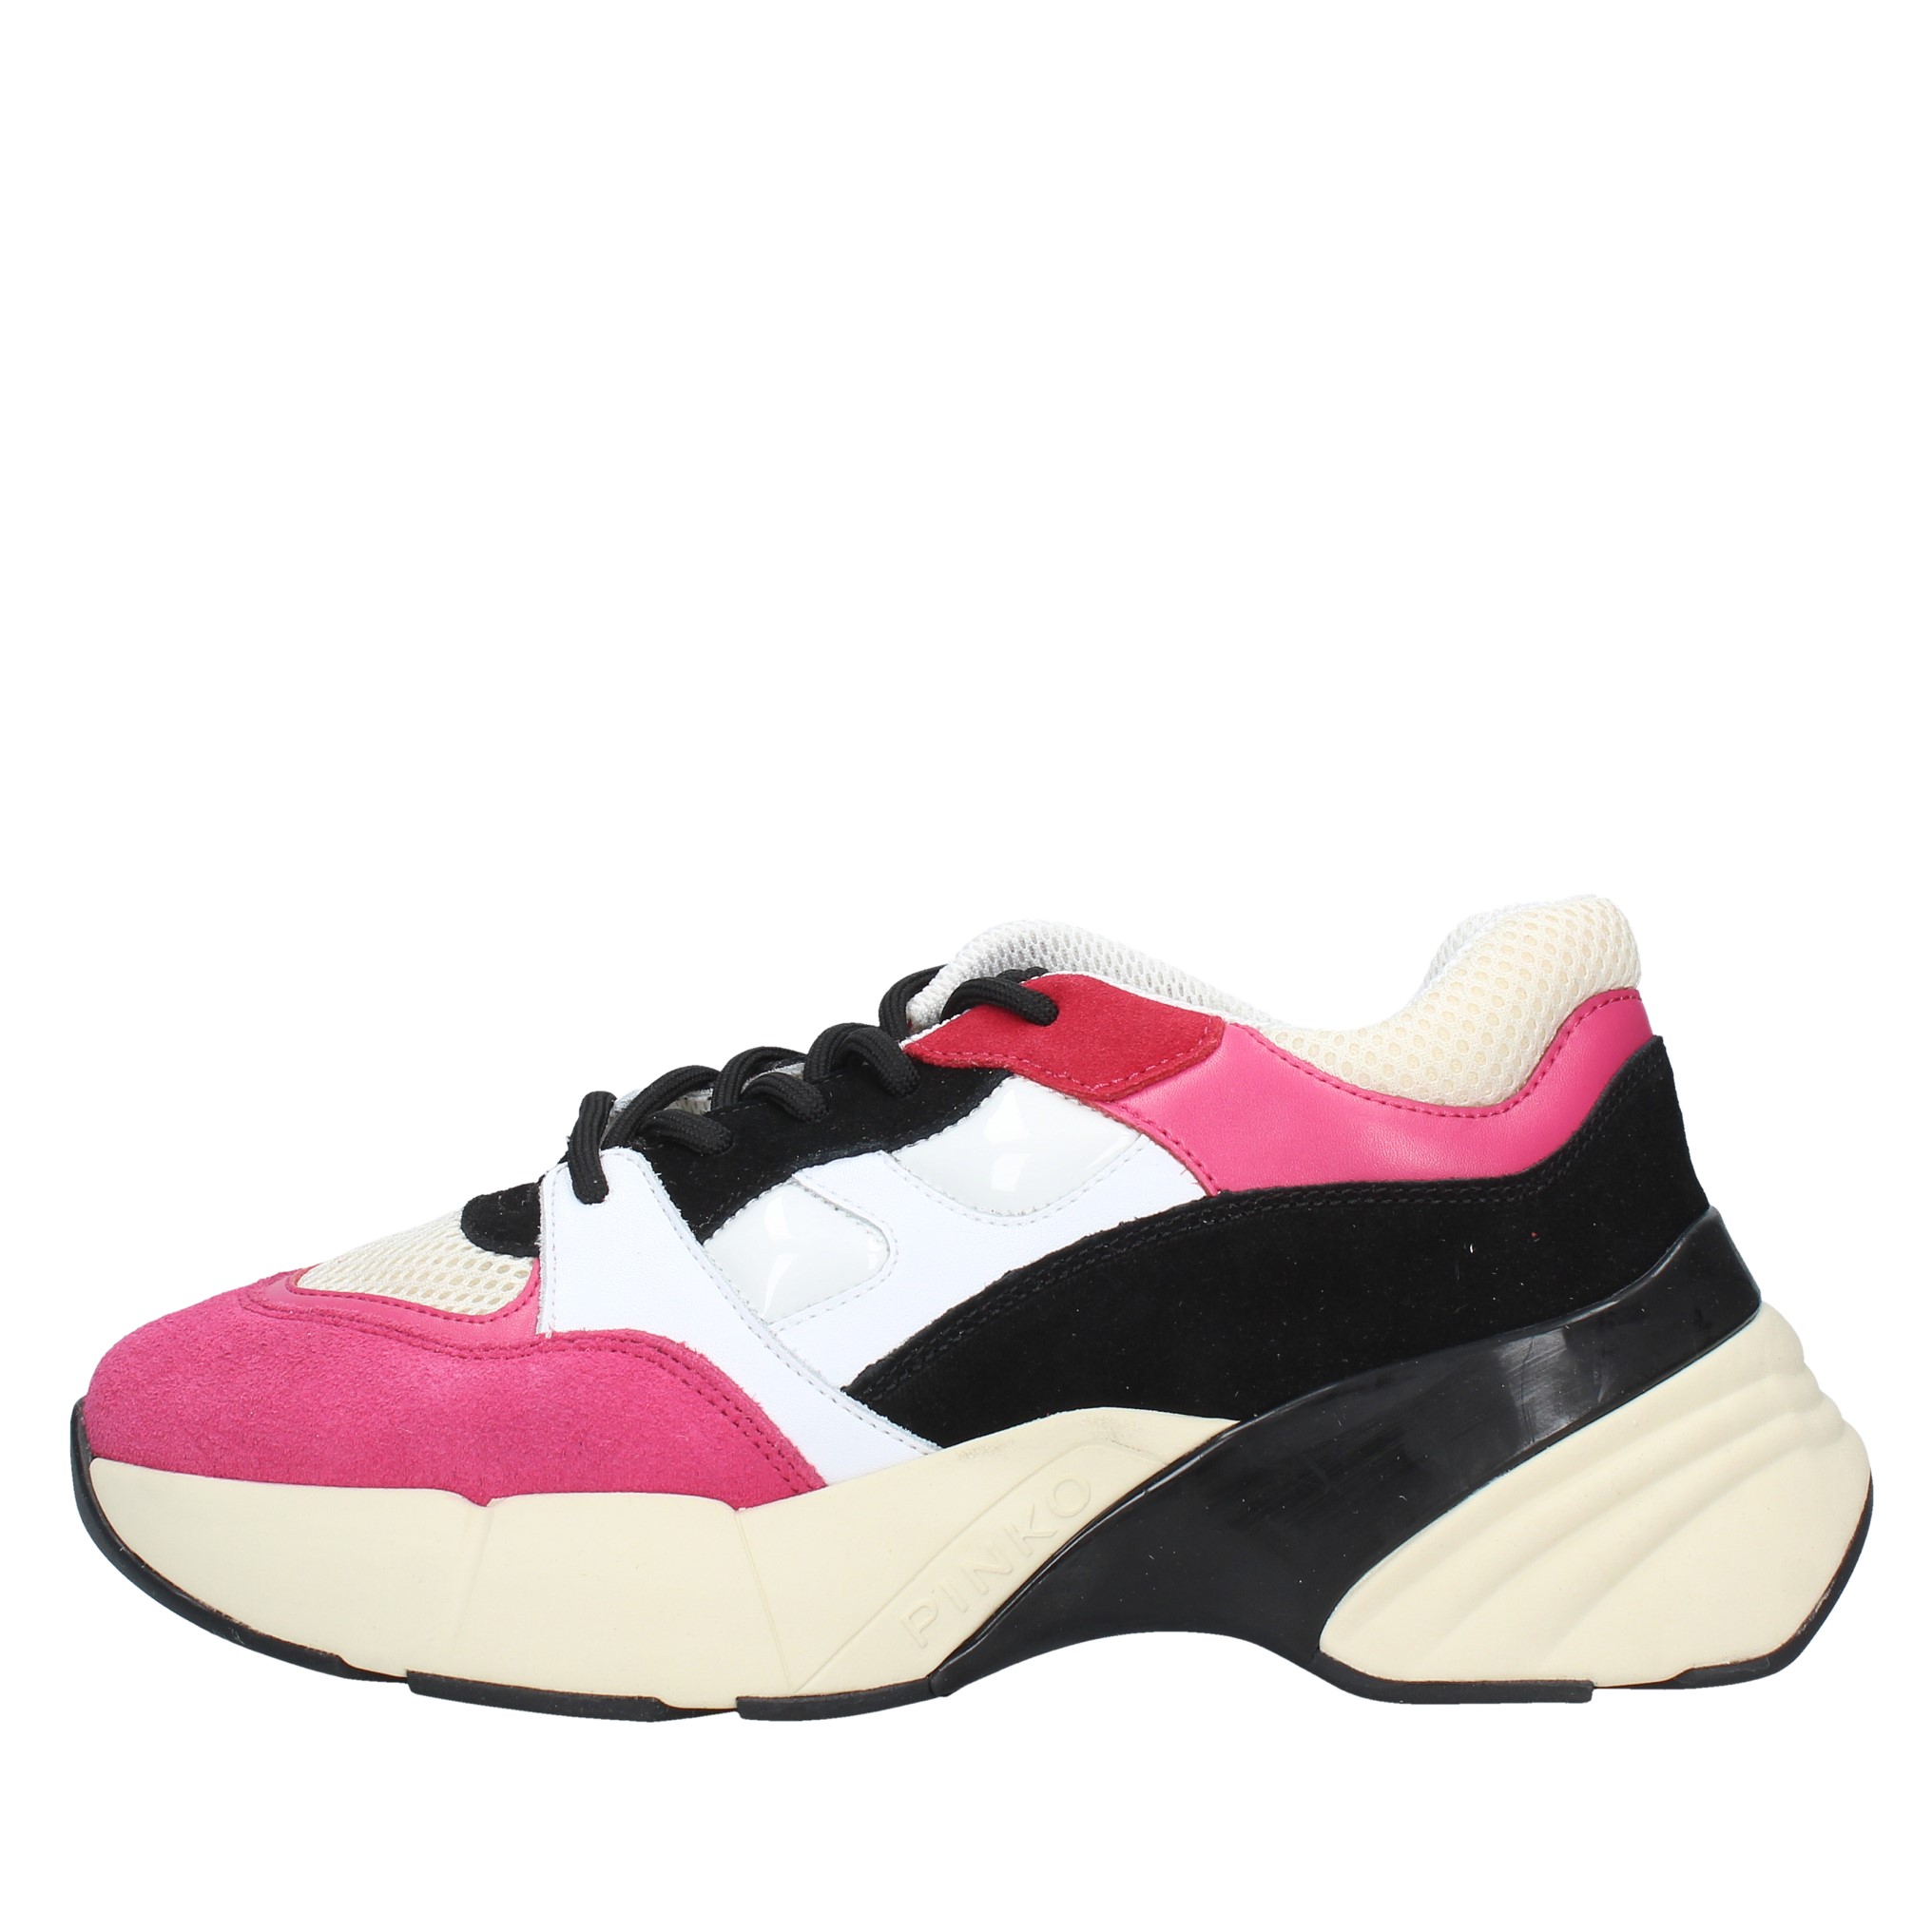 sneakers pinko - PINKO - Ginevra calzature